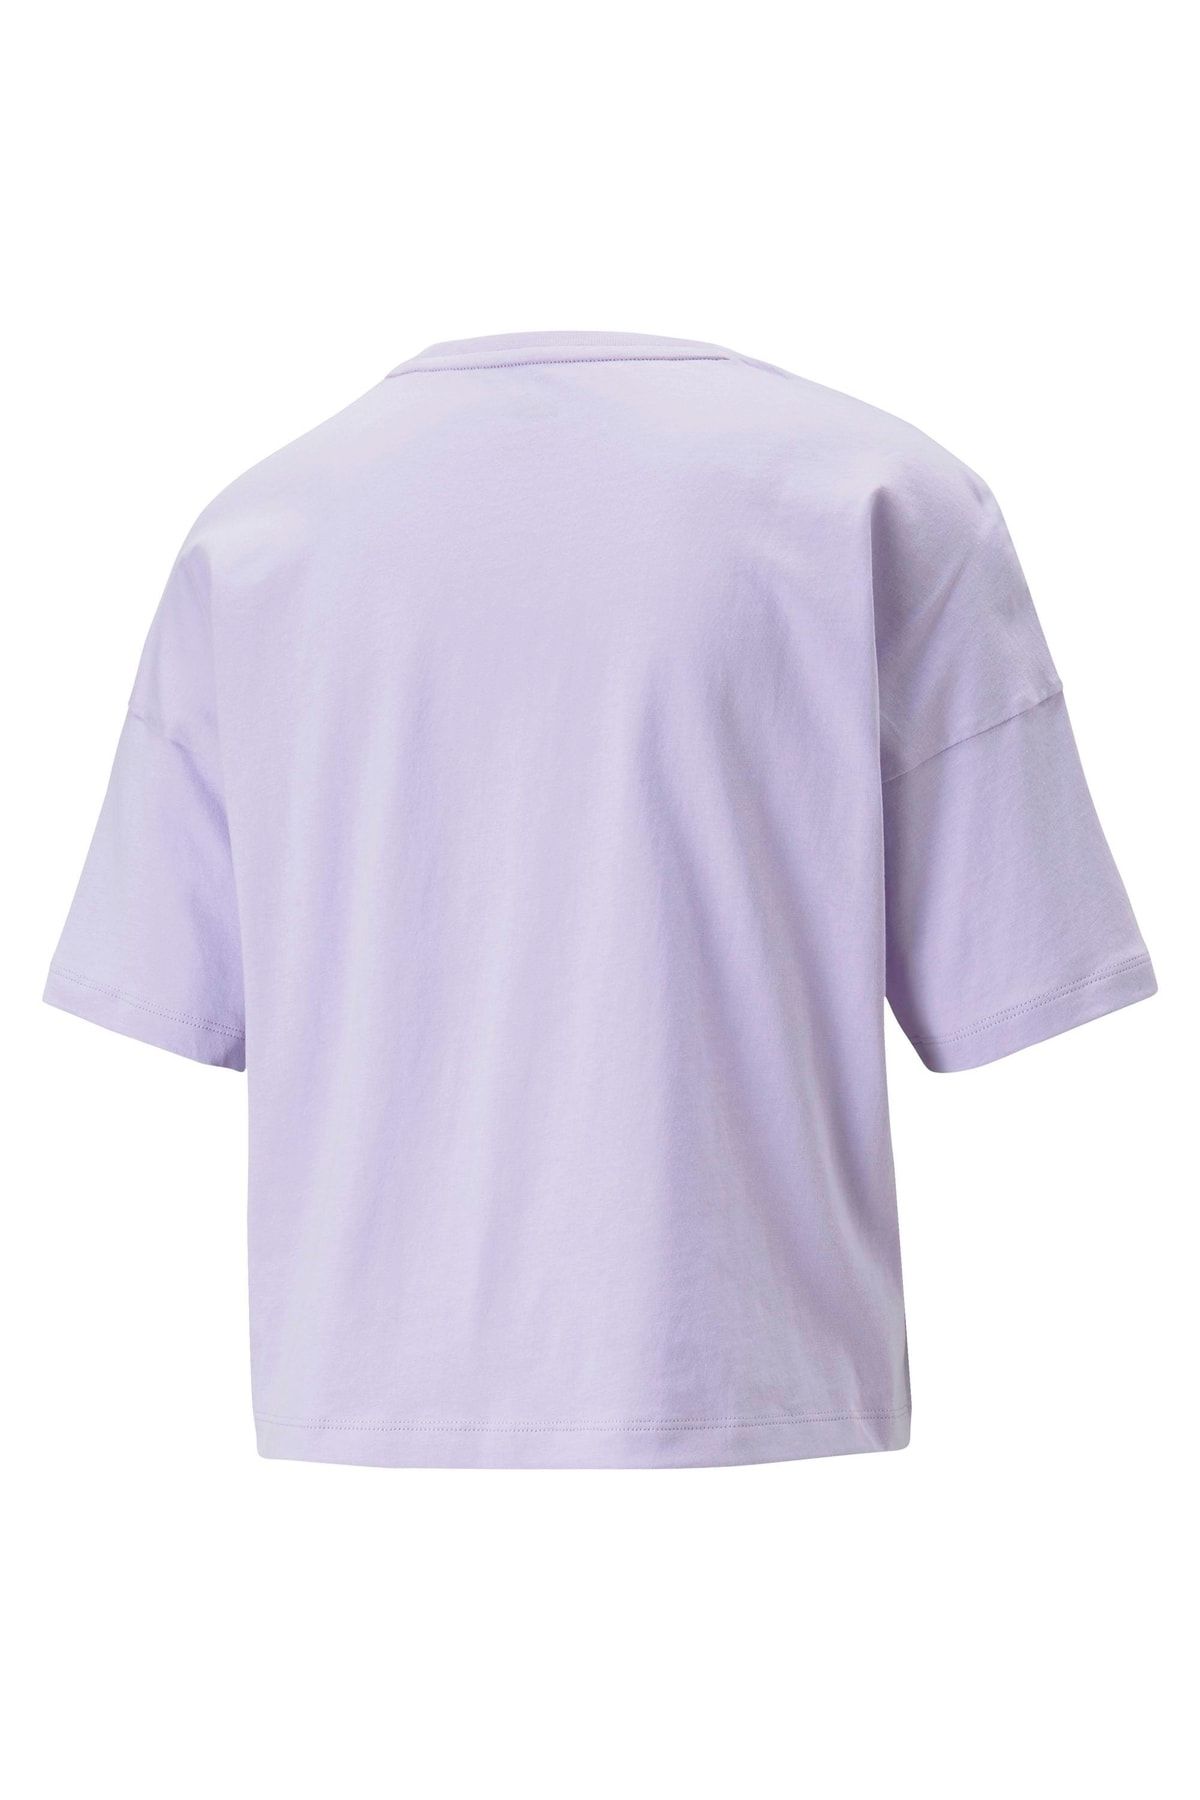 Puma Tee Cropped Lilac Short - Sleeve Trendyol Women\'s Logo Ess T-shirt